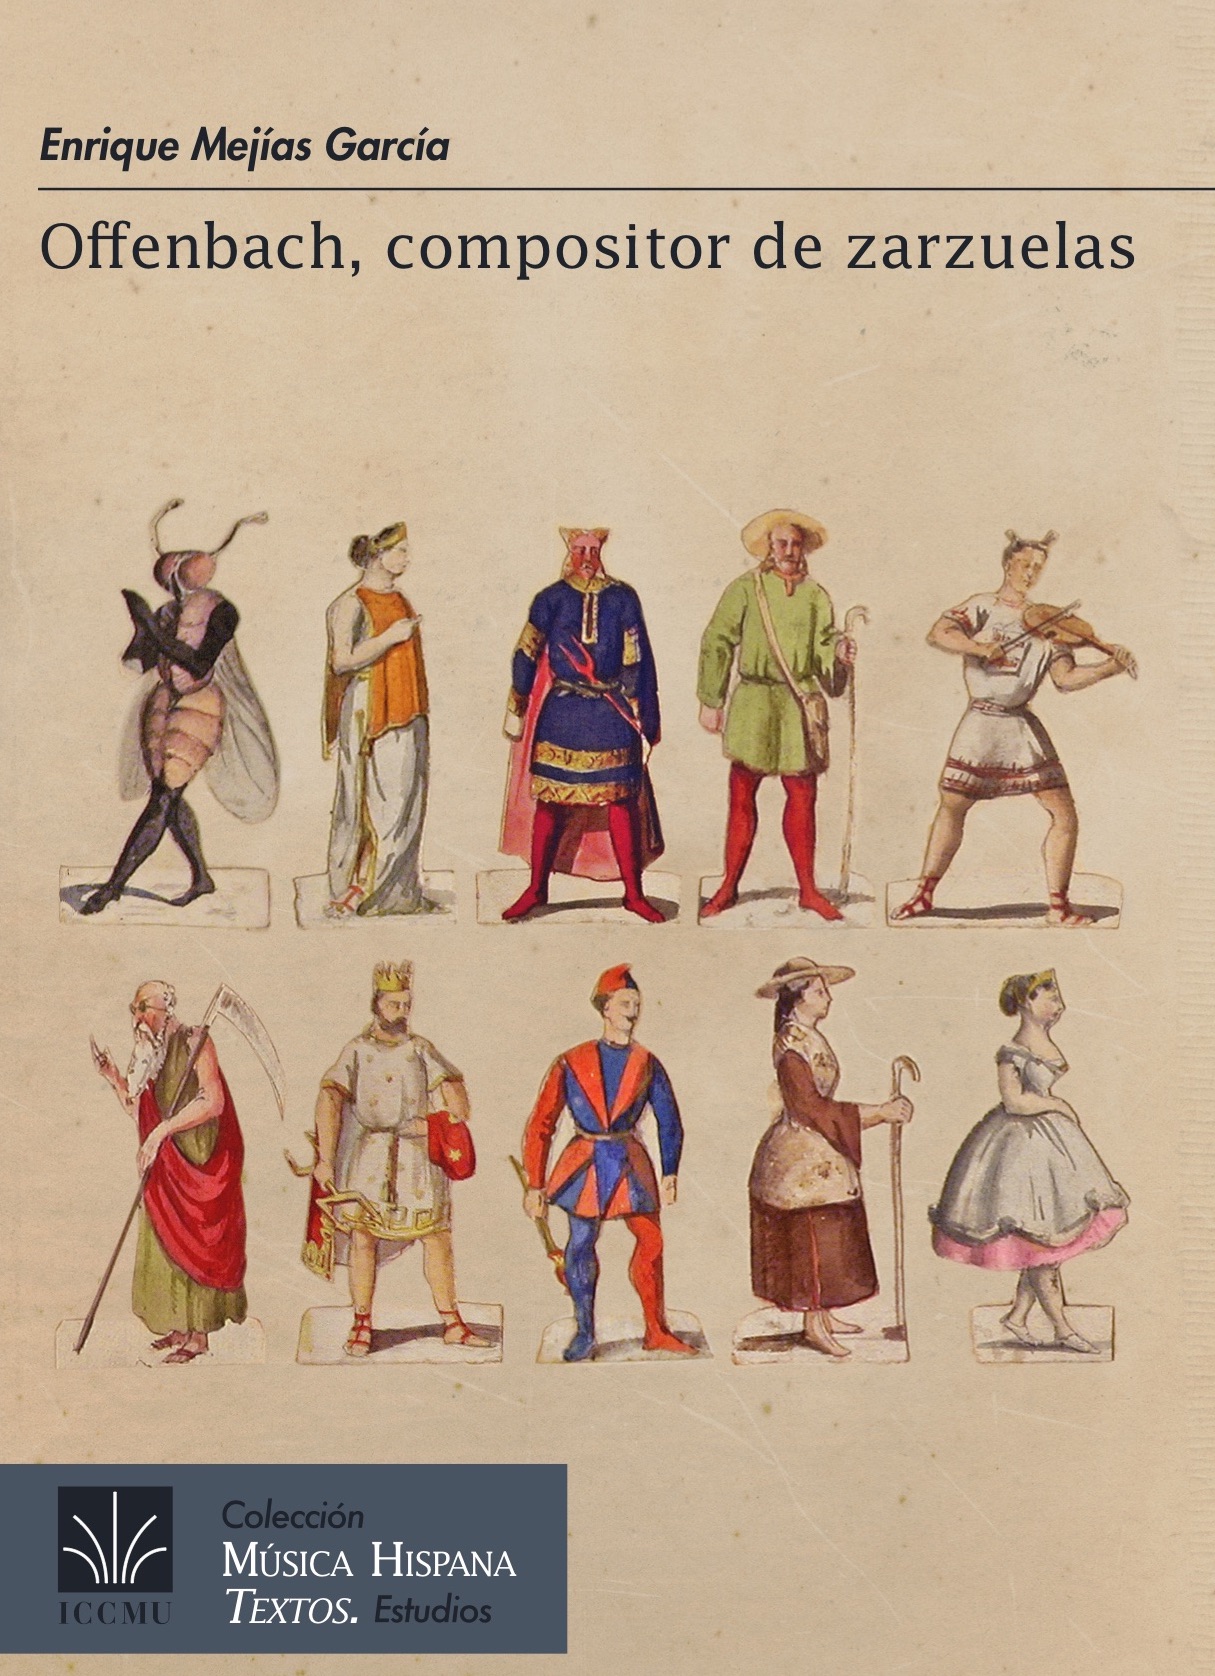 Enrique Mejías García's "Offenbach, compositor de zarzuelas." (Photo: INstituto Complutense de Ciencias Musicales)